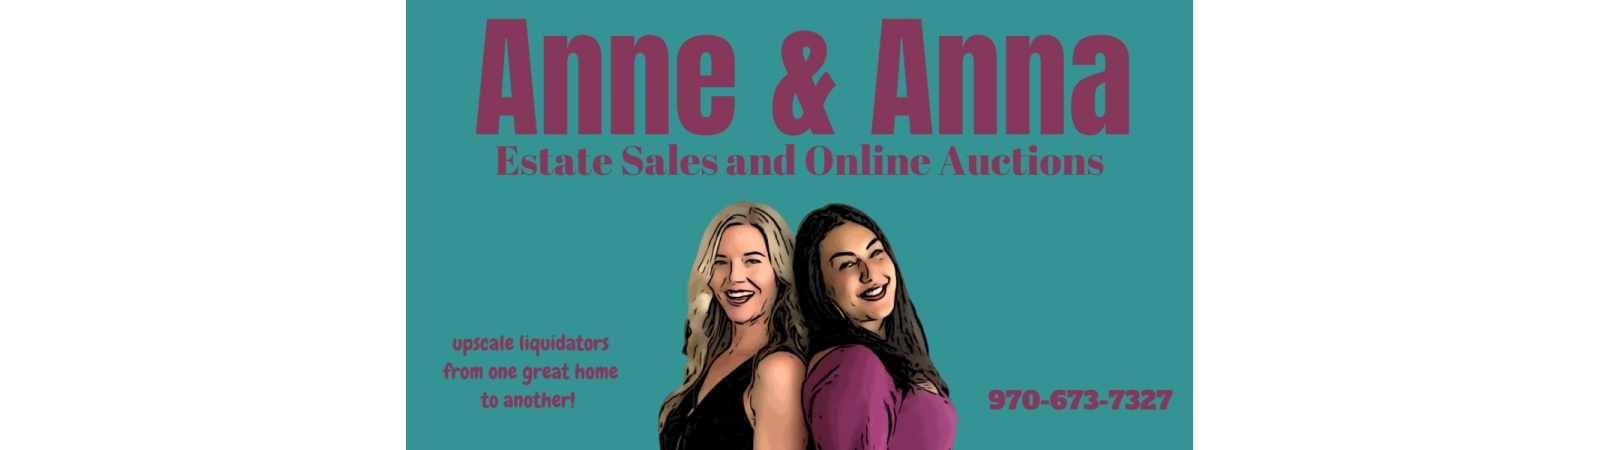 Anne and Anna Estate Sale Services | AuctionNinja